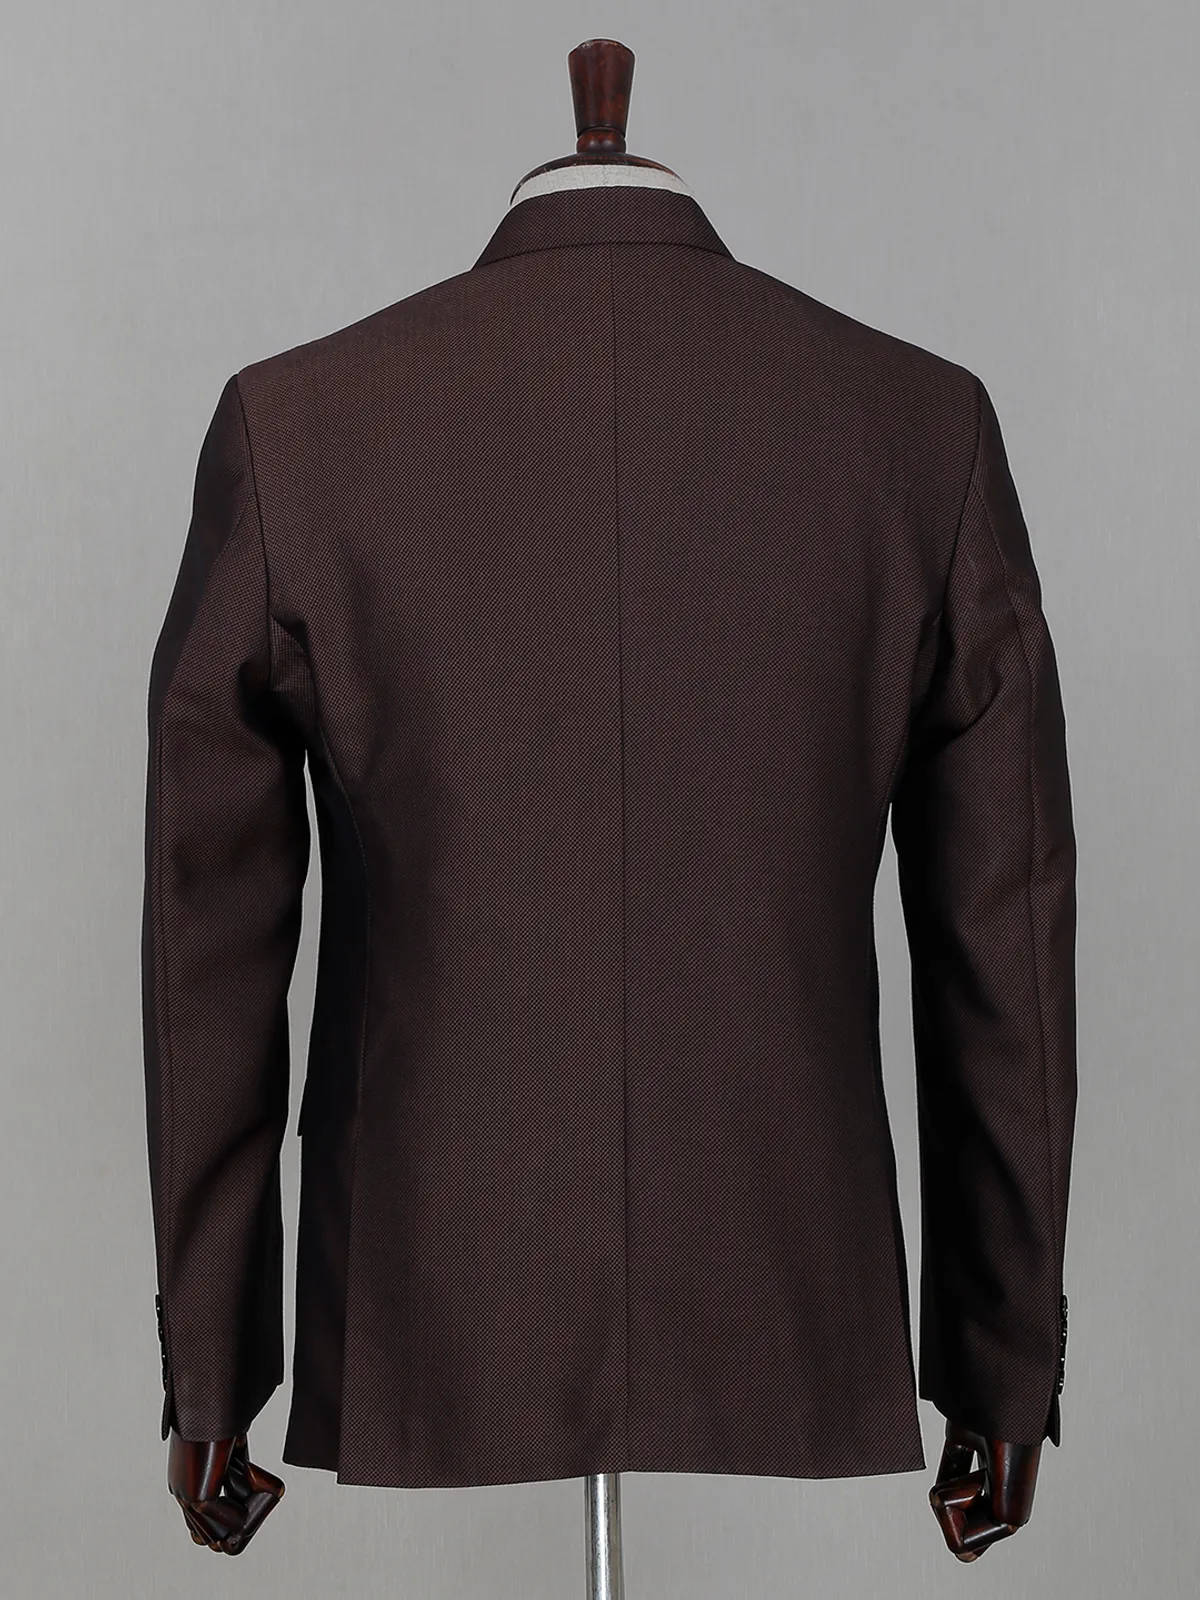 Terry rayon solid dark brown mens coat suit